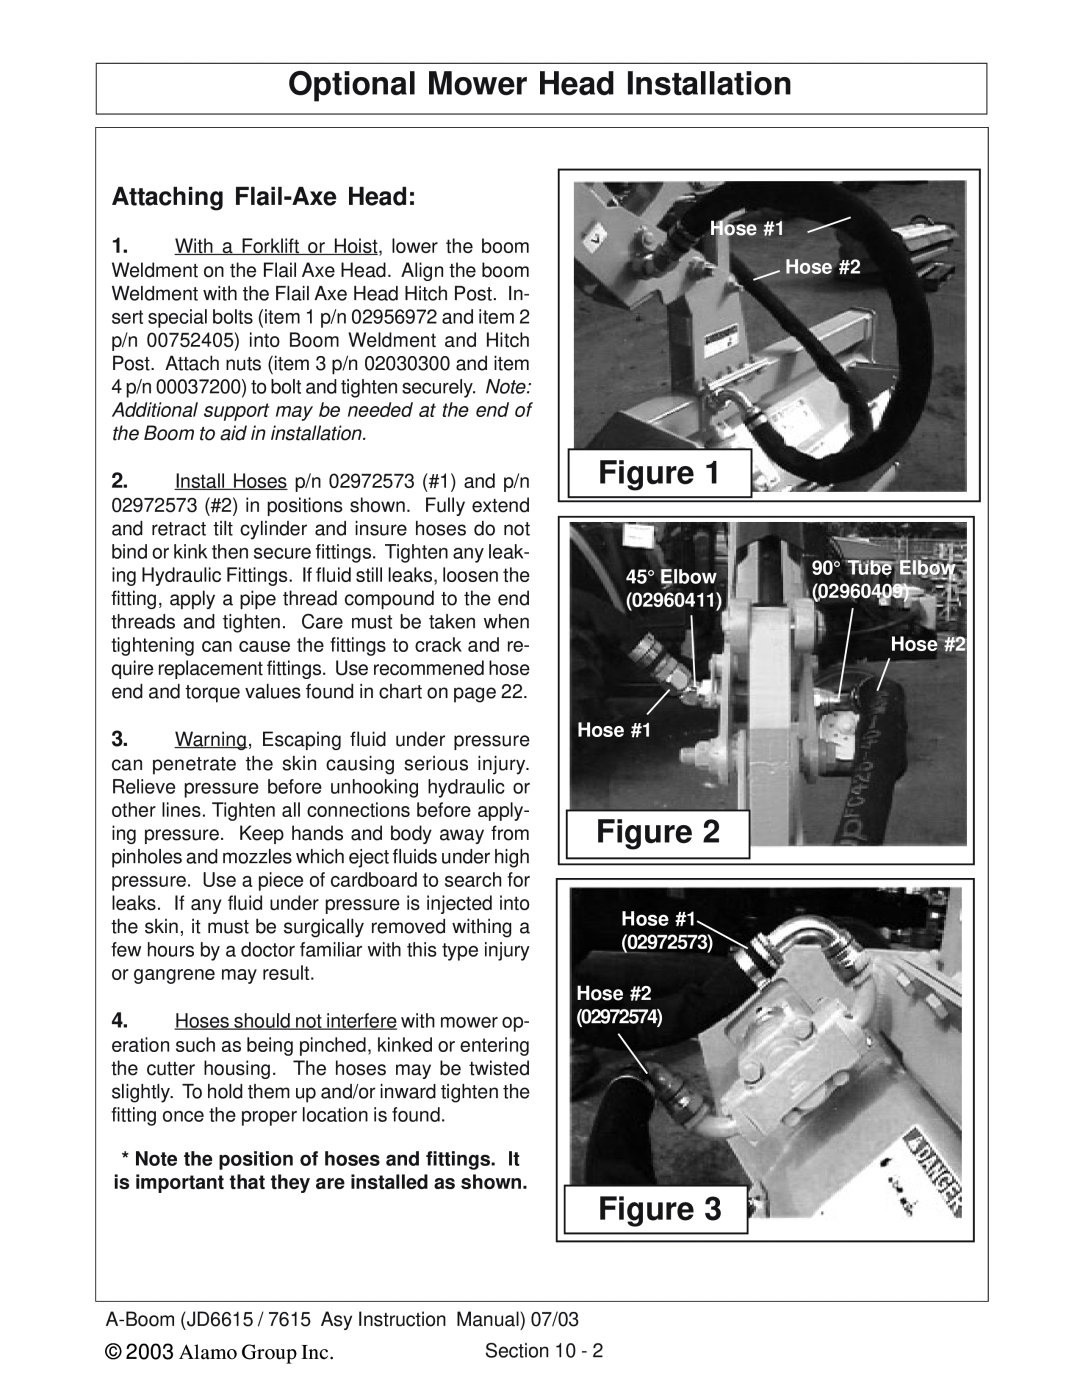 Alamo DSEB-D16 Optional Mower Head Installation, Attaching Flail-Axe Head, Alamo Group Inc, Hose #1 Hose #2, Elbow 